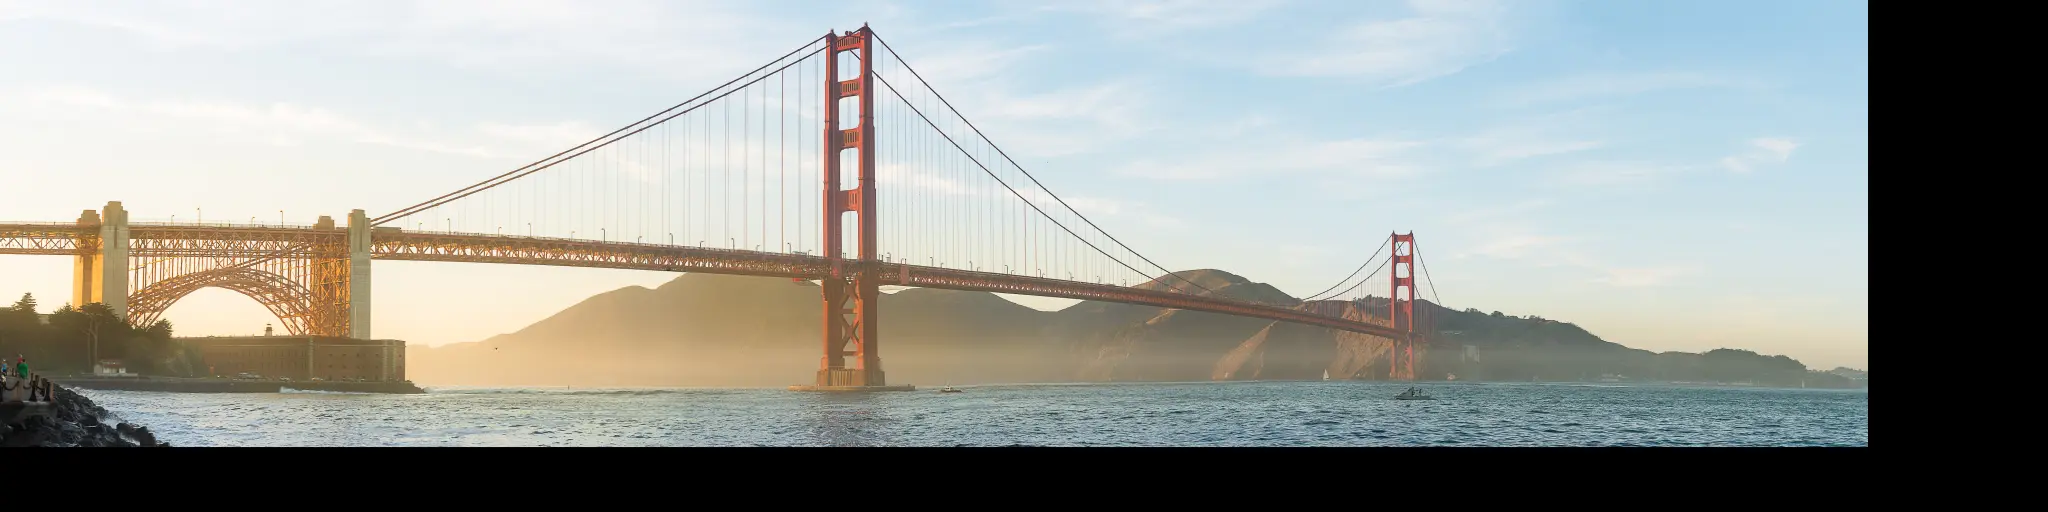 San Francisco Golden Gate Bridge panorama from a distance